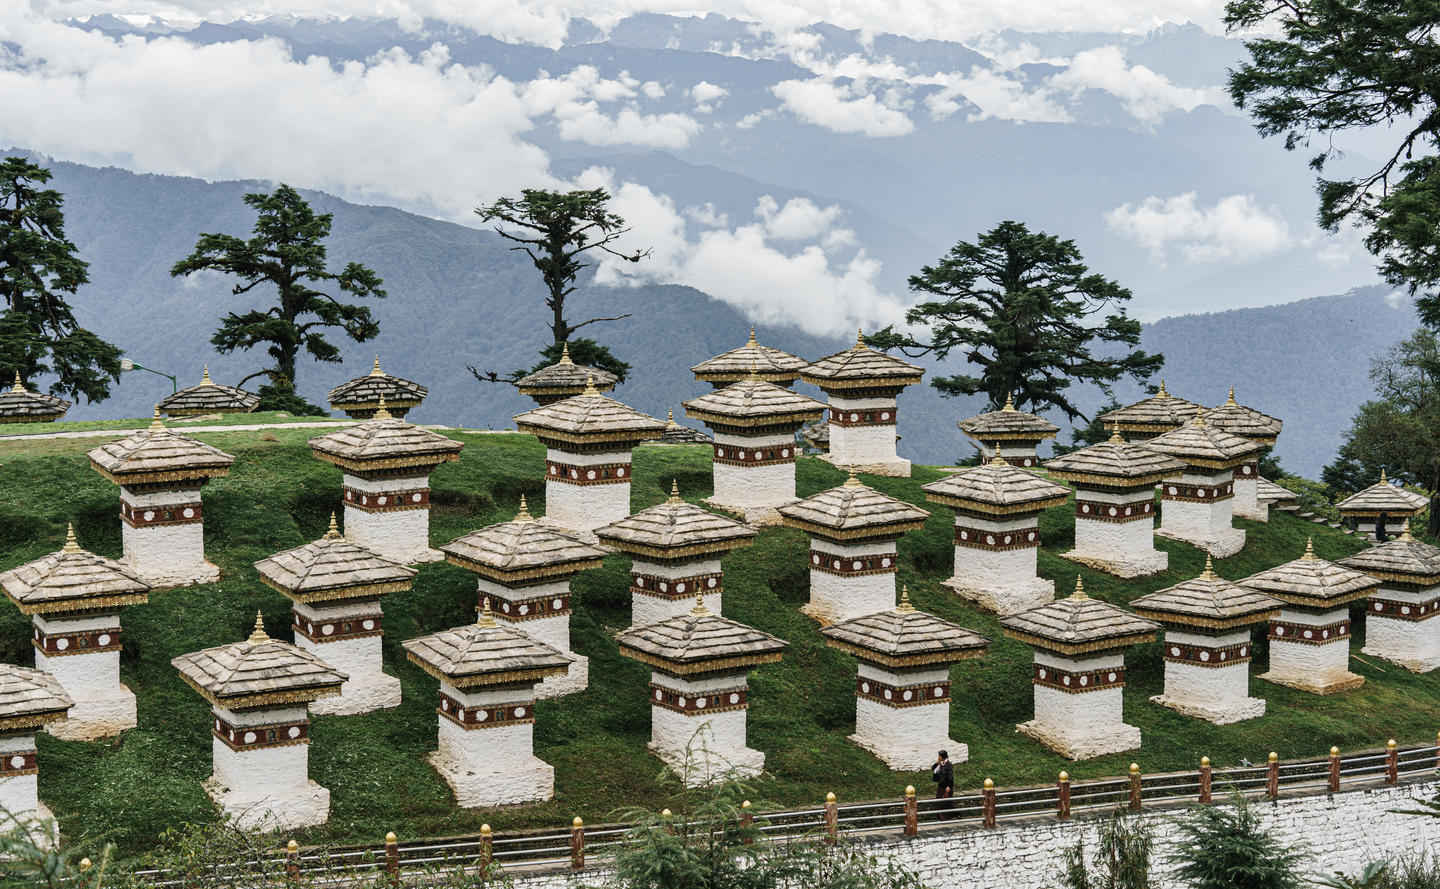 Amankora, Bhutan - Bumthang, Experience